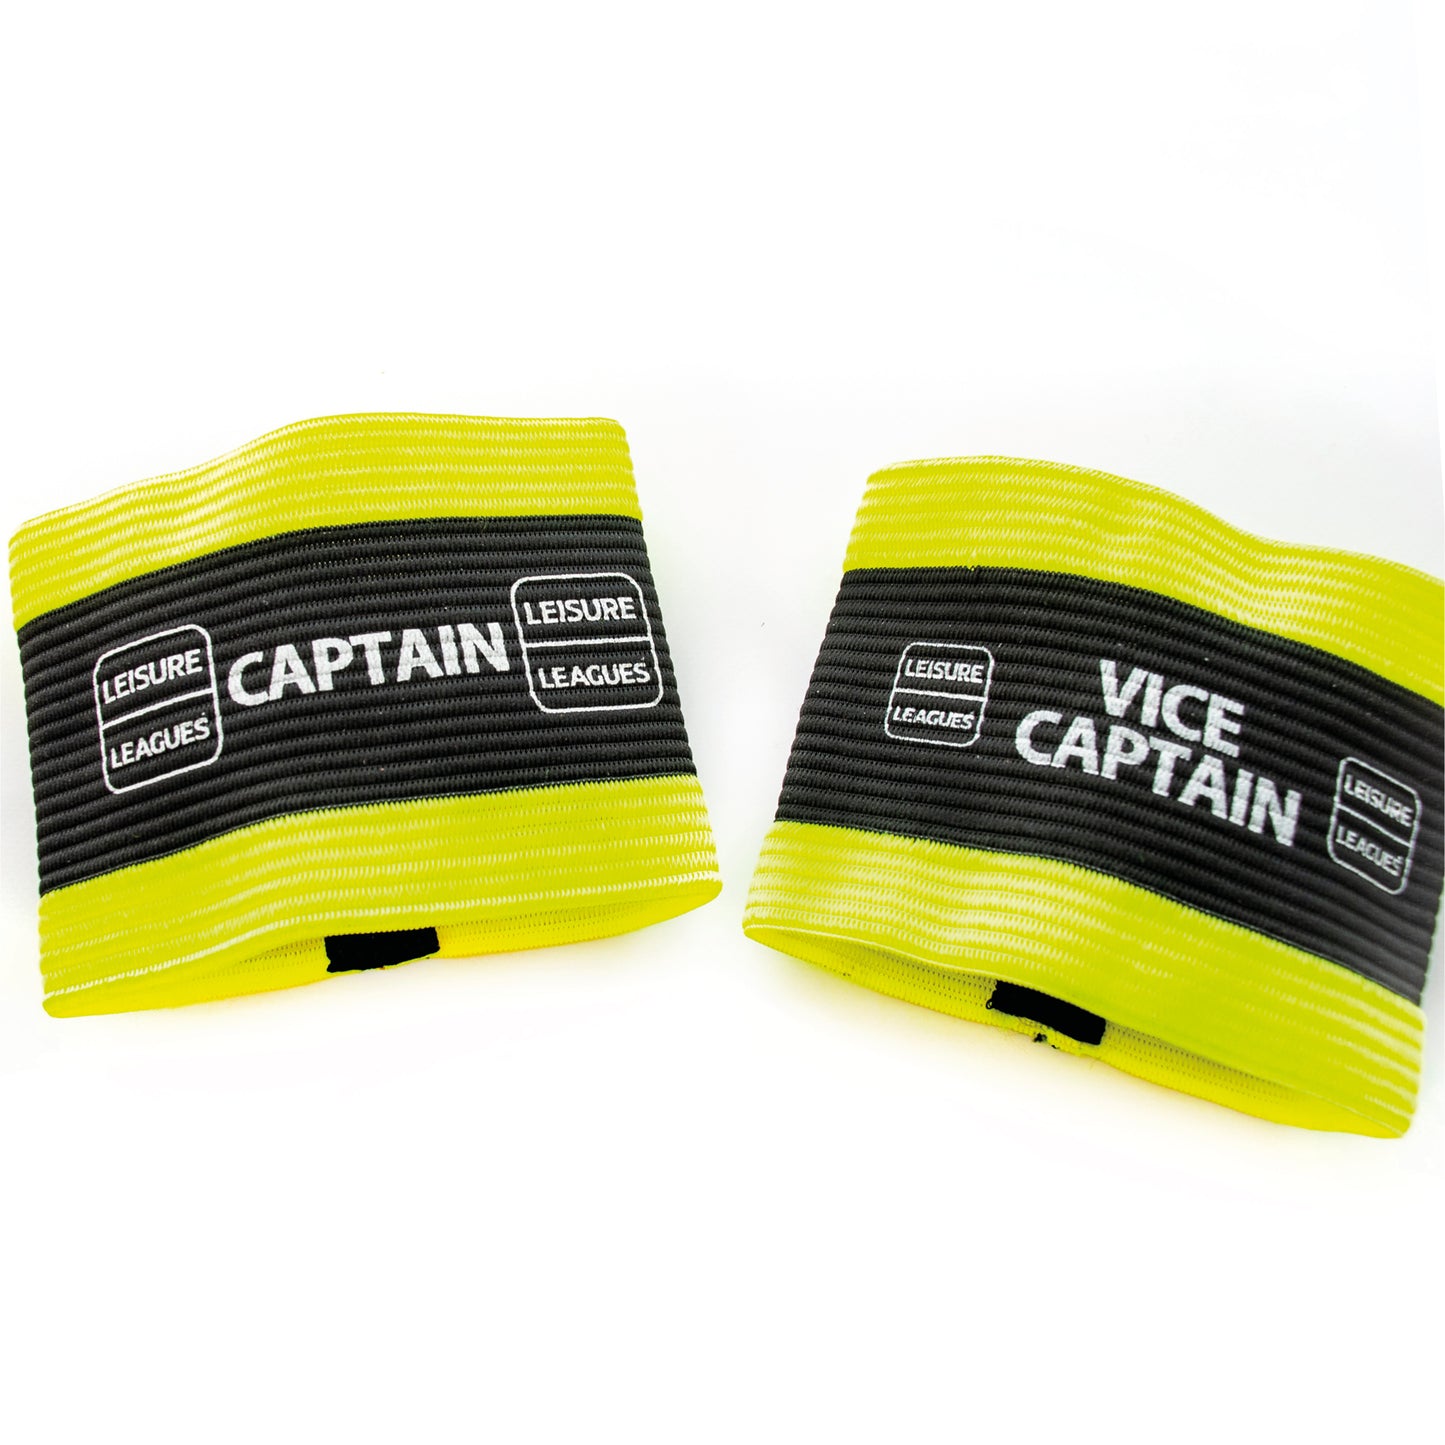 Leisure leagues football Armbands Captain Vice-Captain